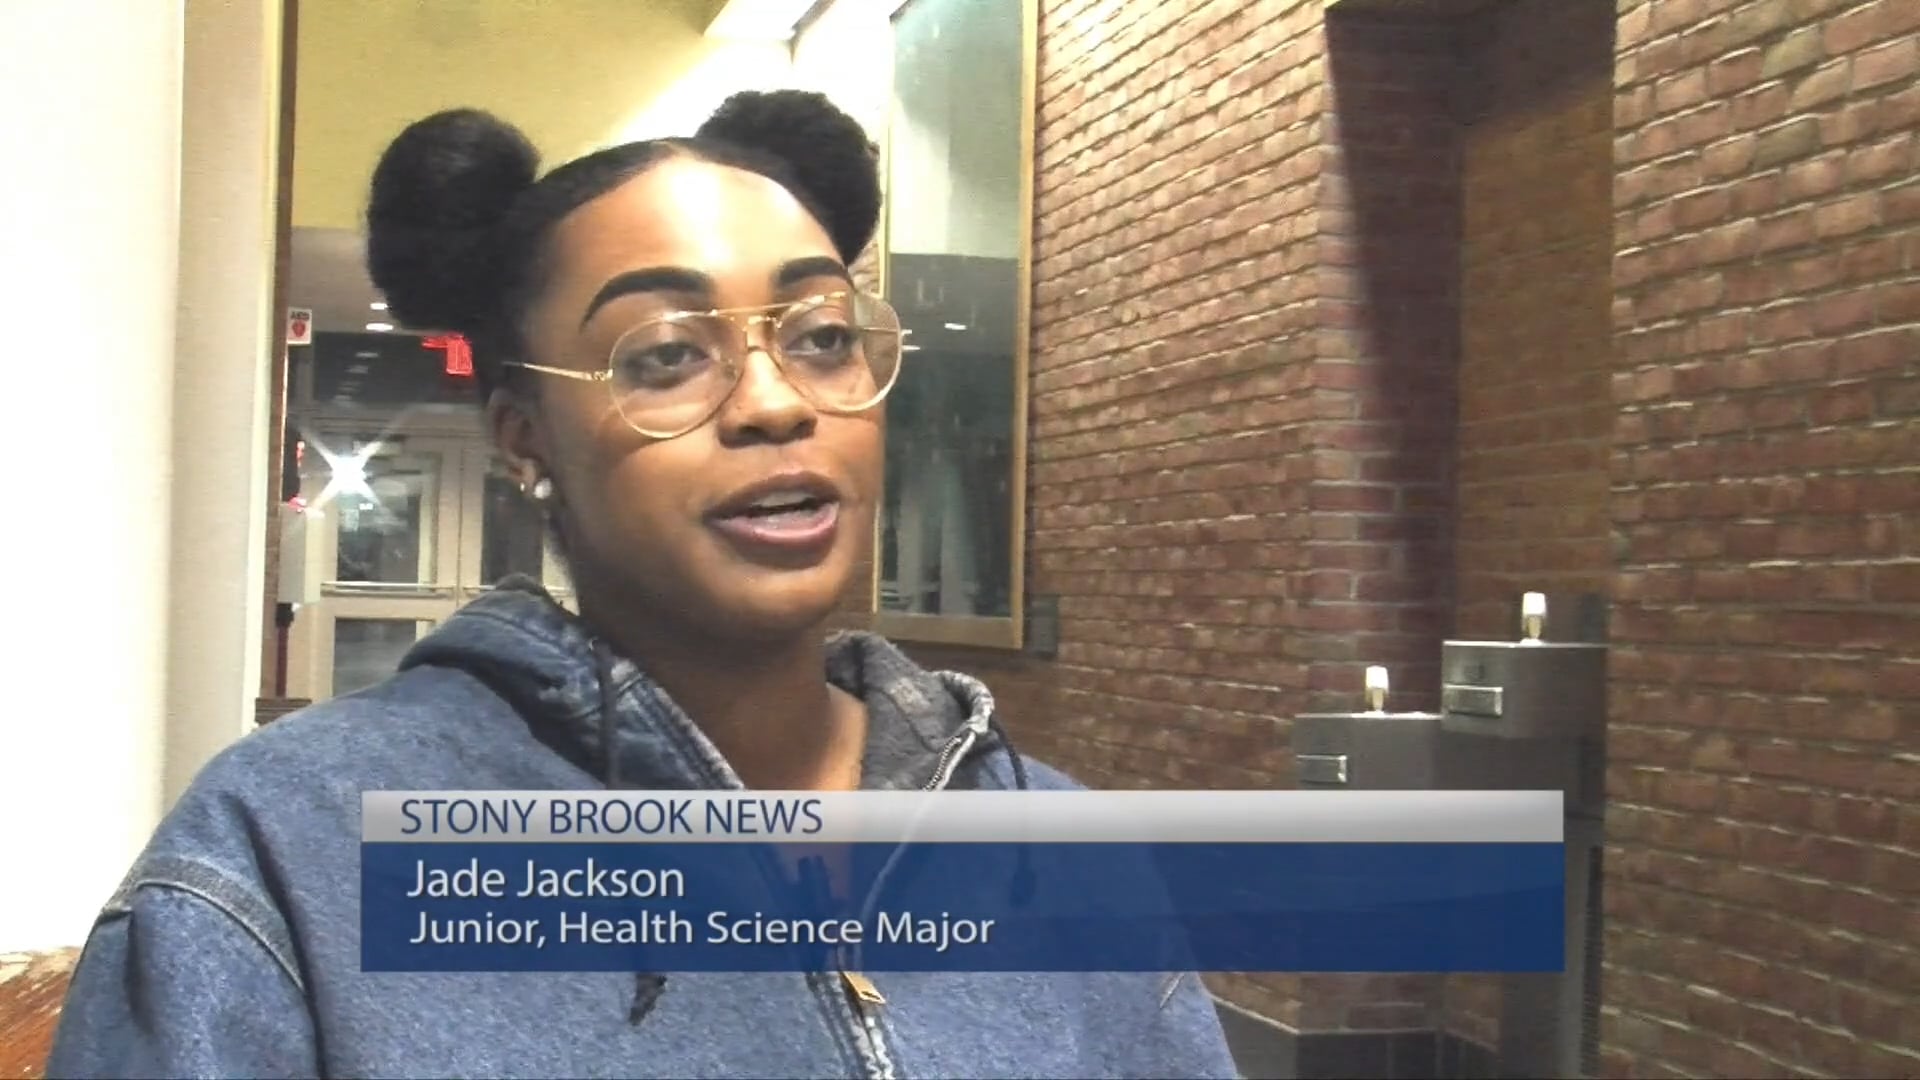 Stony Brook News: Afro-Punk Culture Celebrated